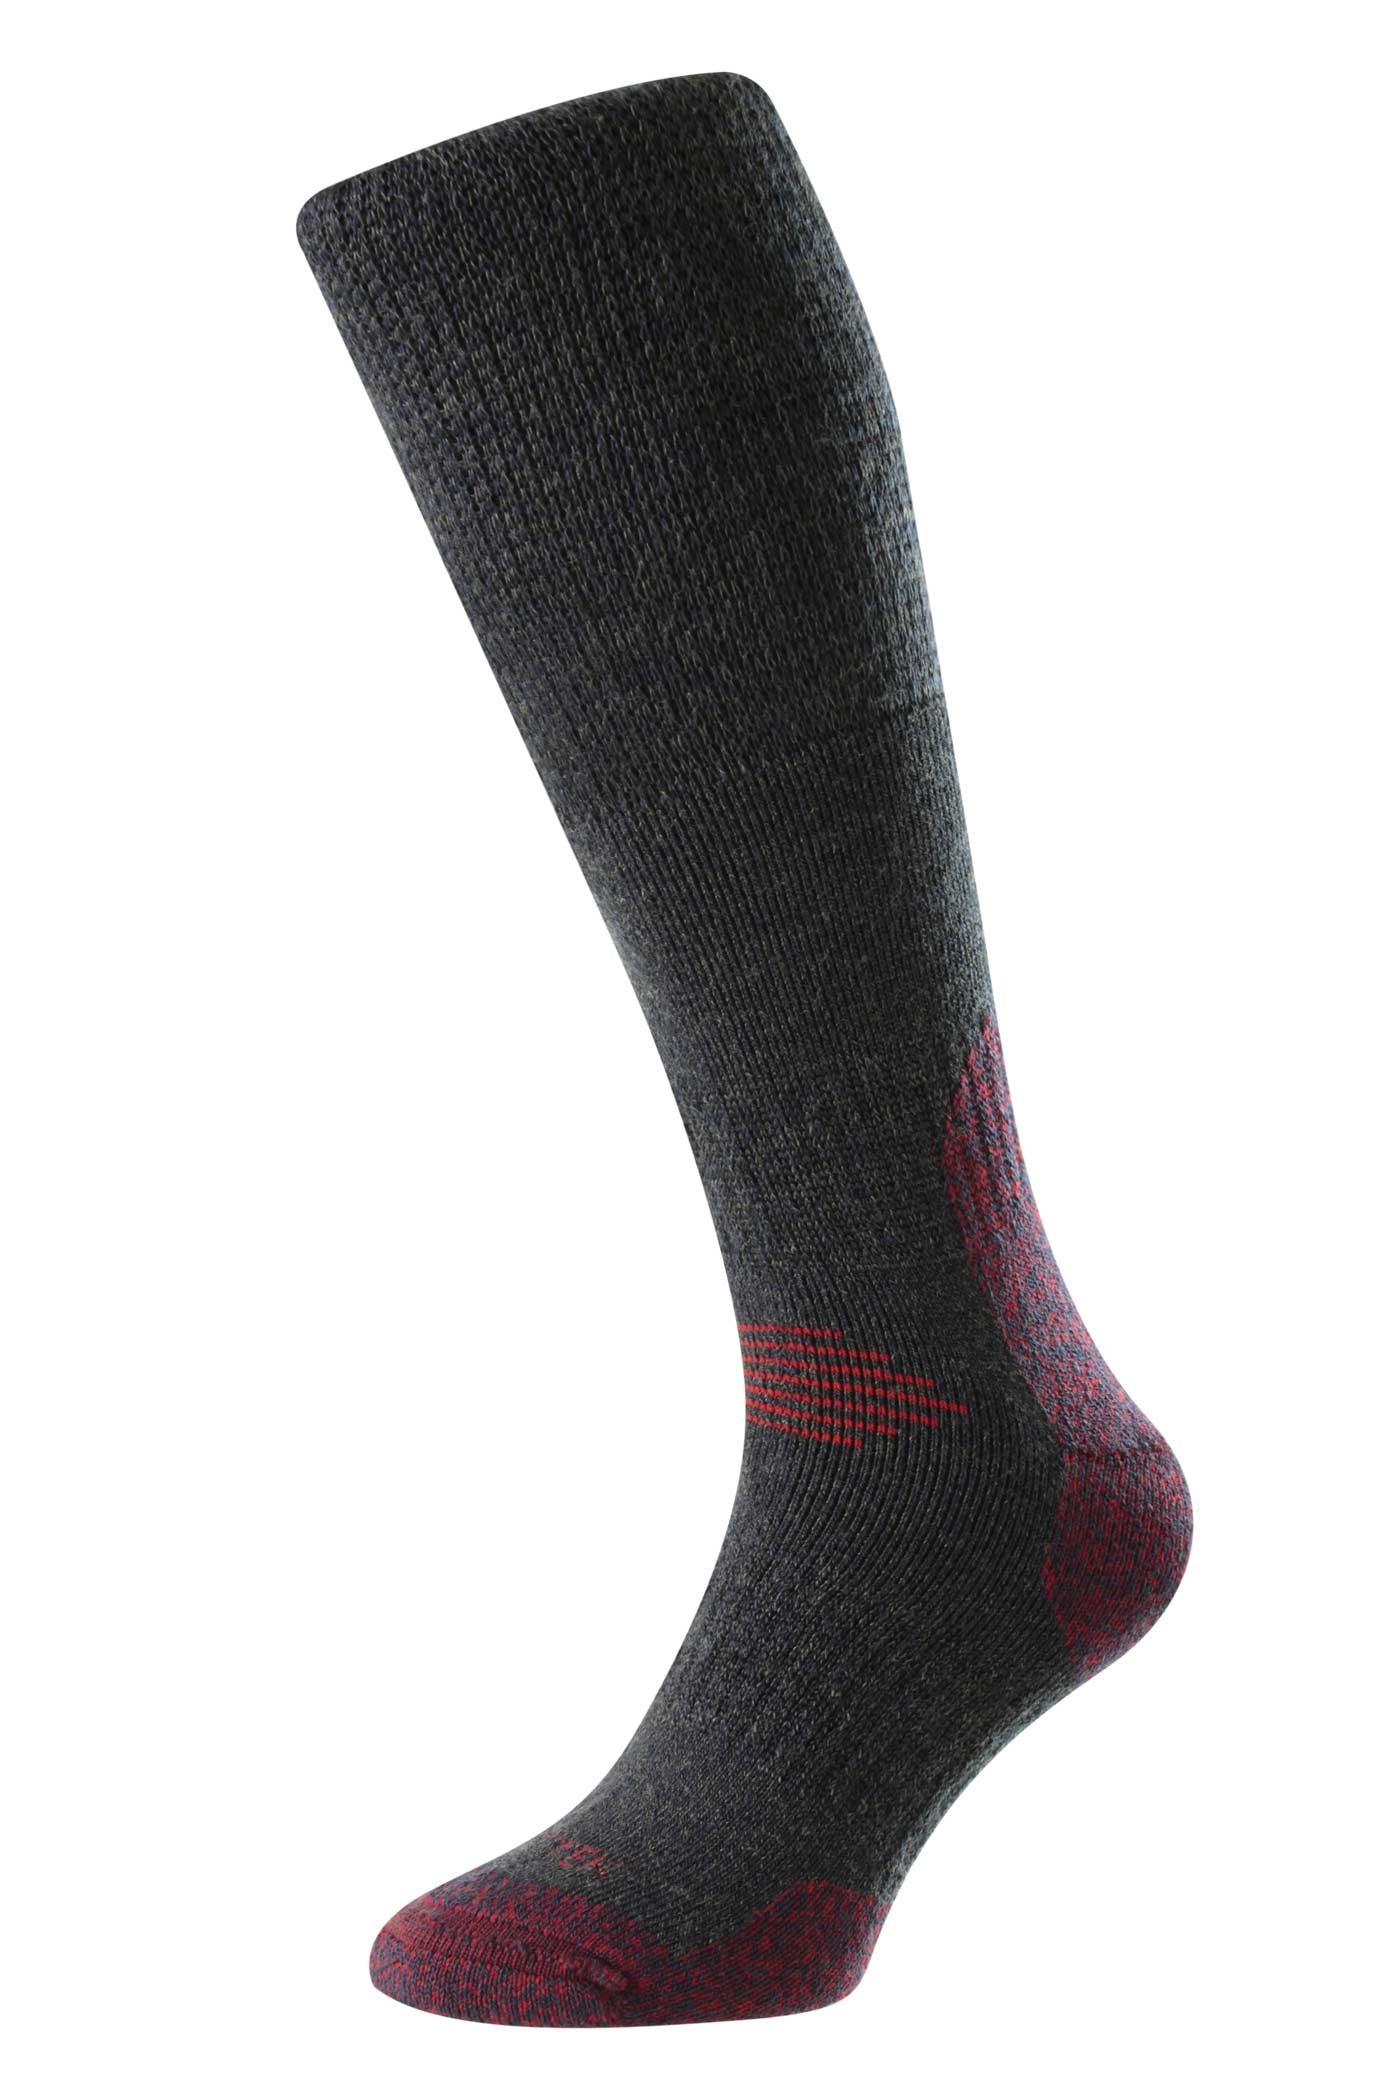 HJ Hall ProTrek HJ703 - Mountain Comfort Top Socks - Navy/Red